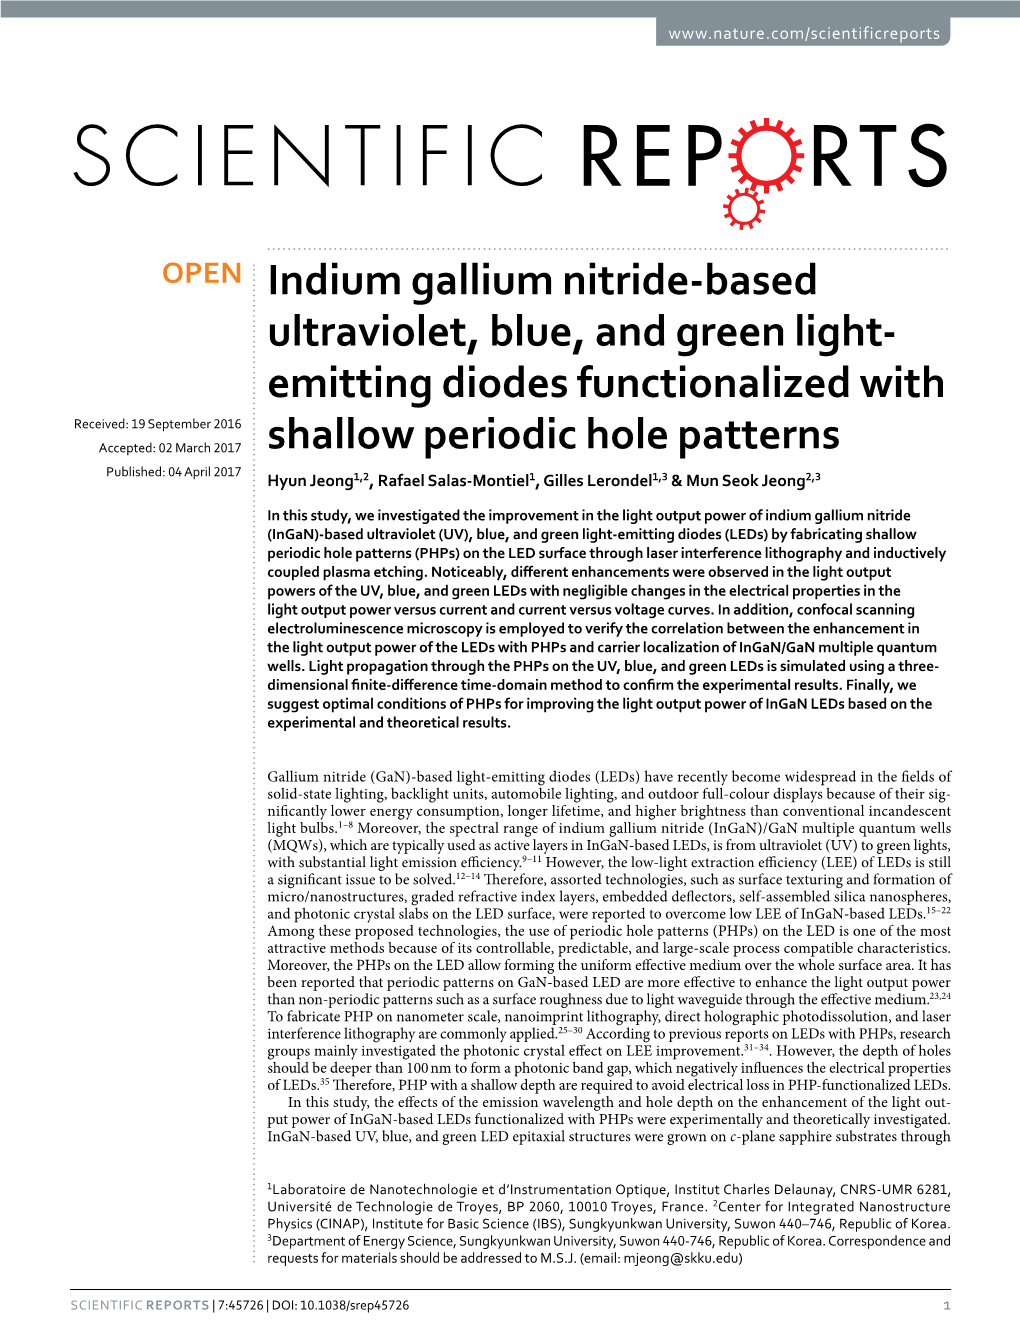 Indium Gallium Nitride-Based Ultraviolet, Blue, and Green Light